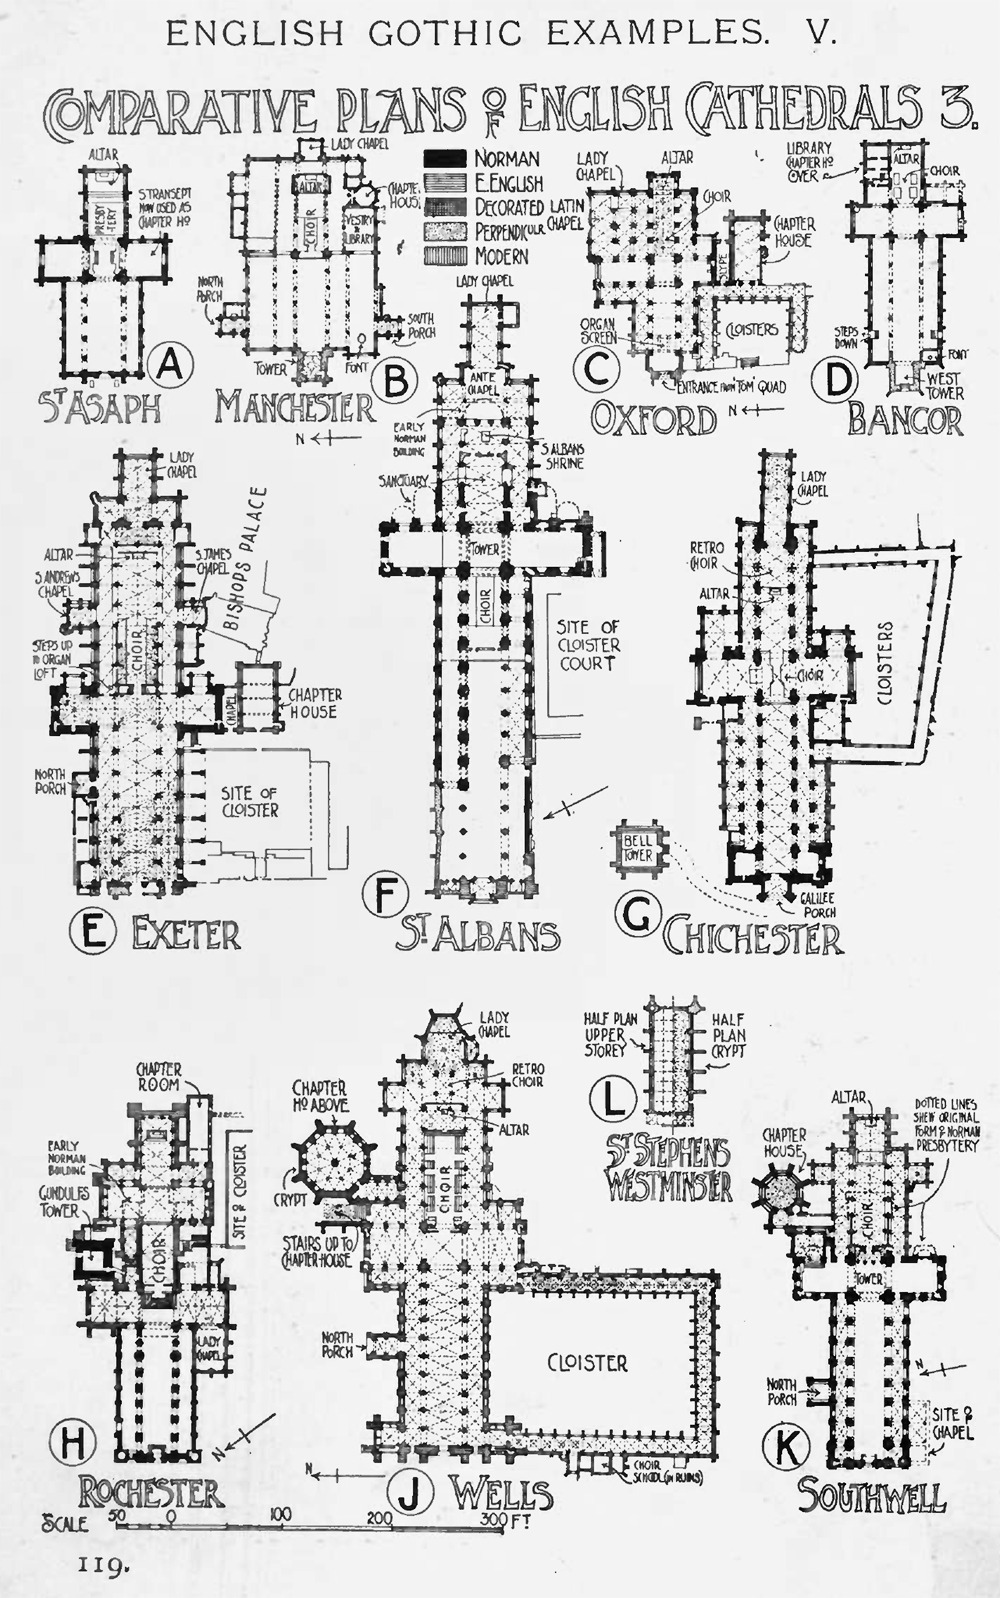 European Architecture — Comparative plans of English